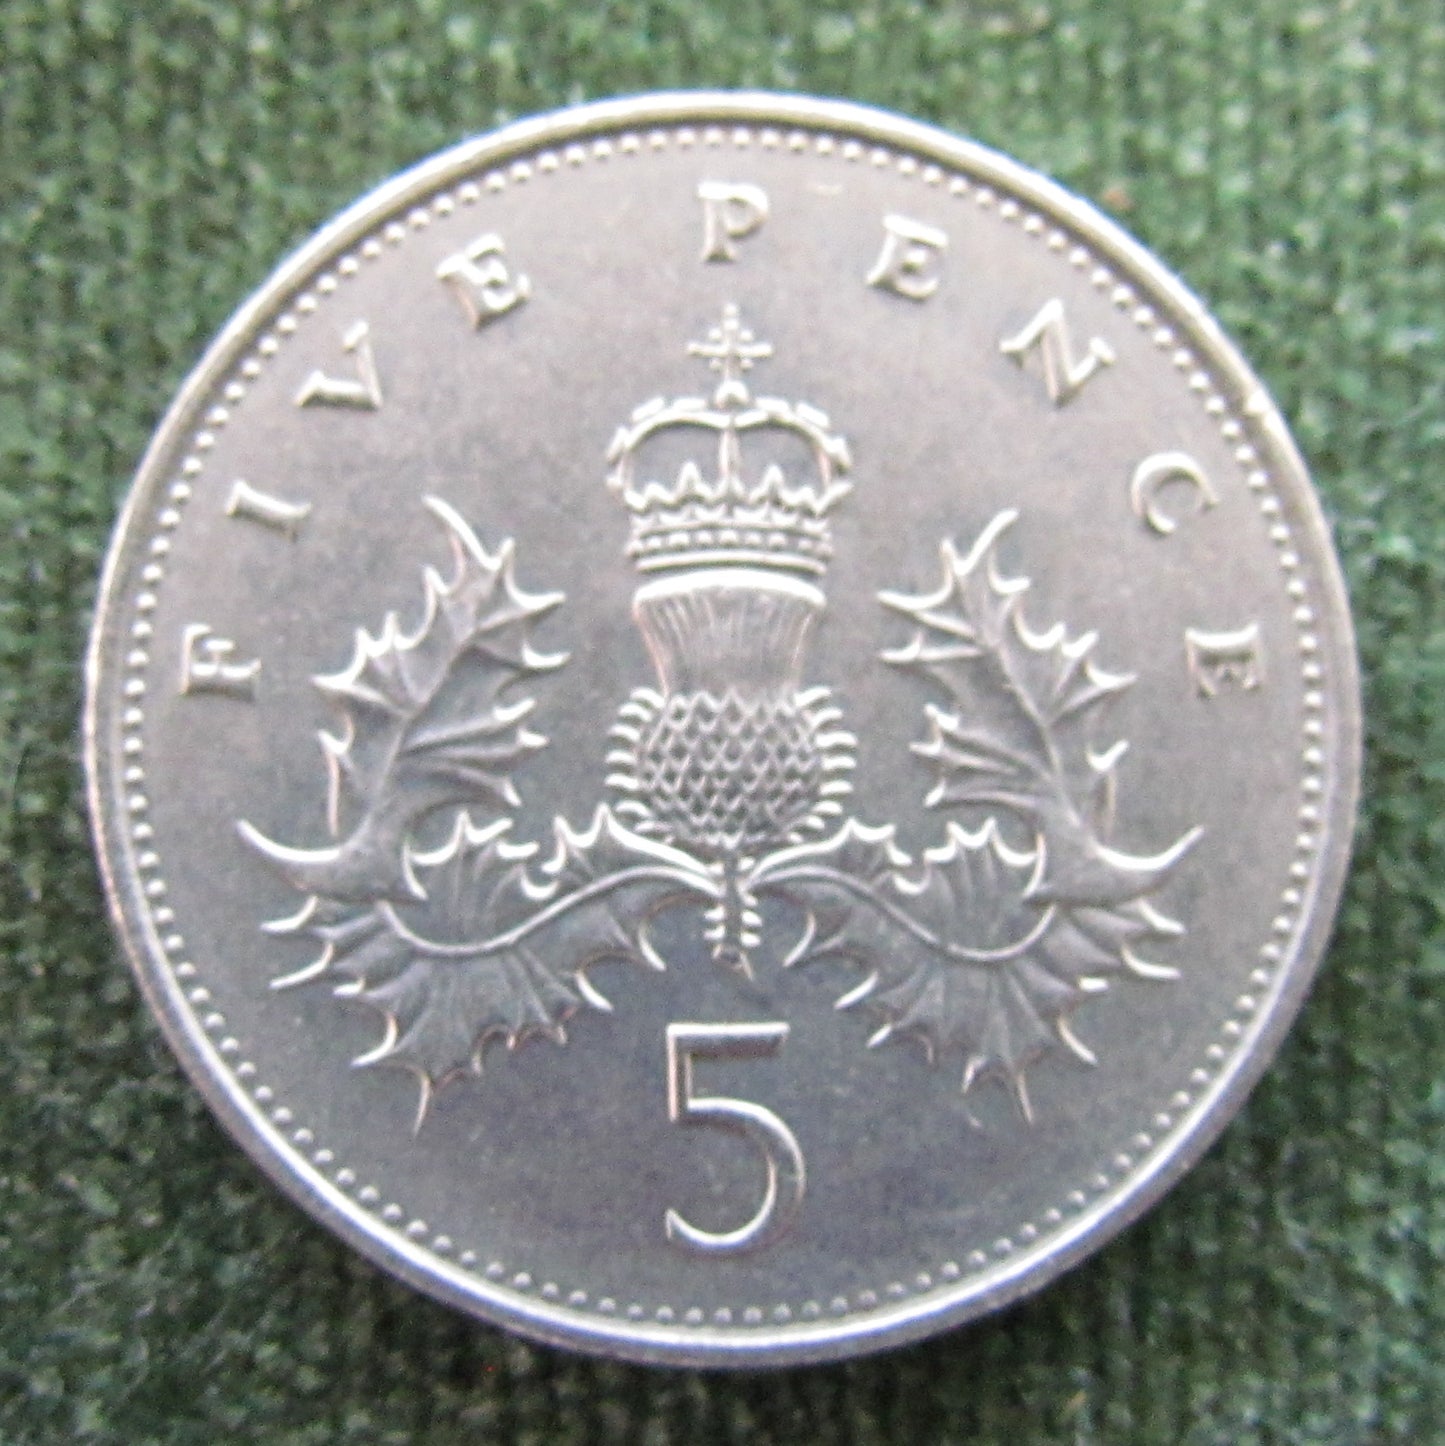 GB British UK English 1988 5 New Pence Queen Elizabeth II Coin